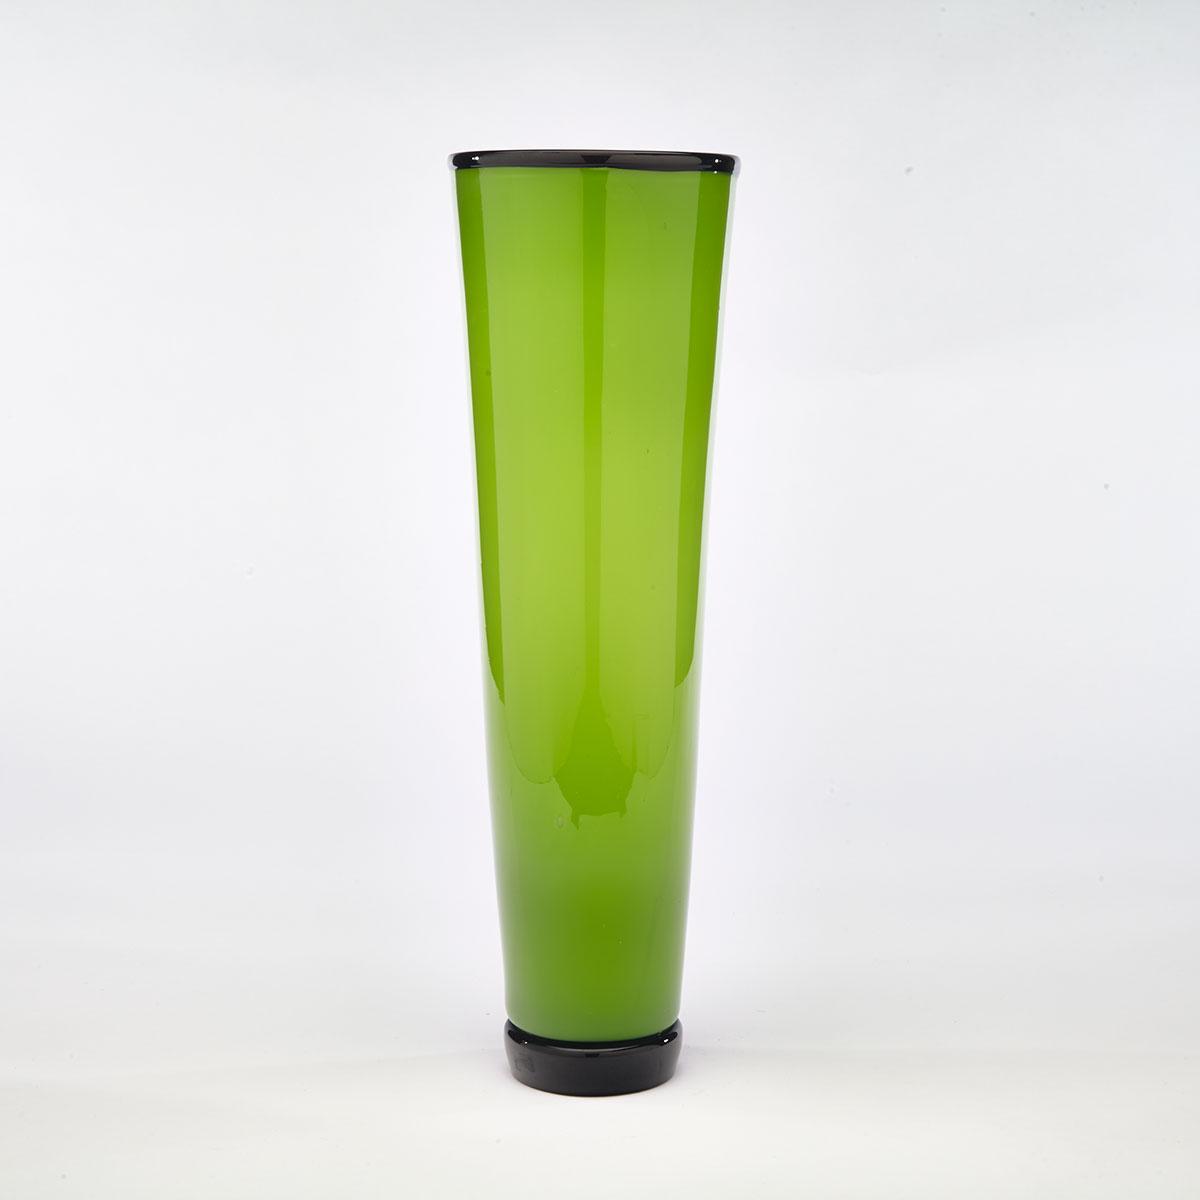 Rhonda Kozan (Canadian), Green Glass Vase, 2002